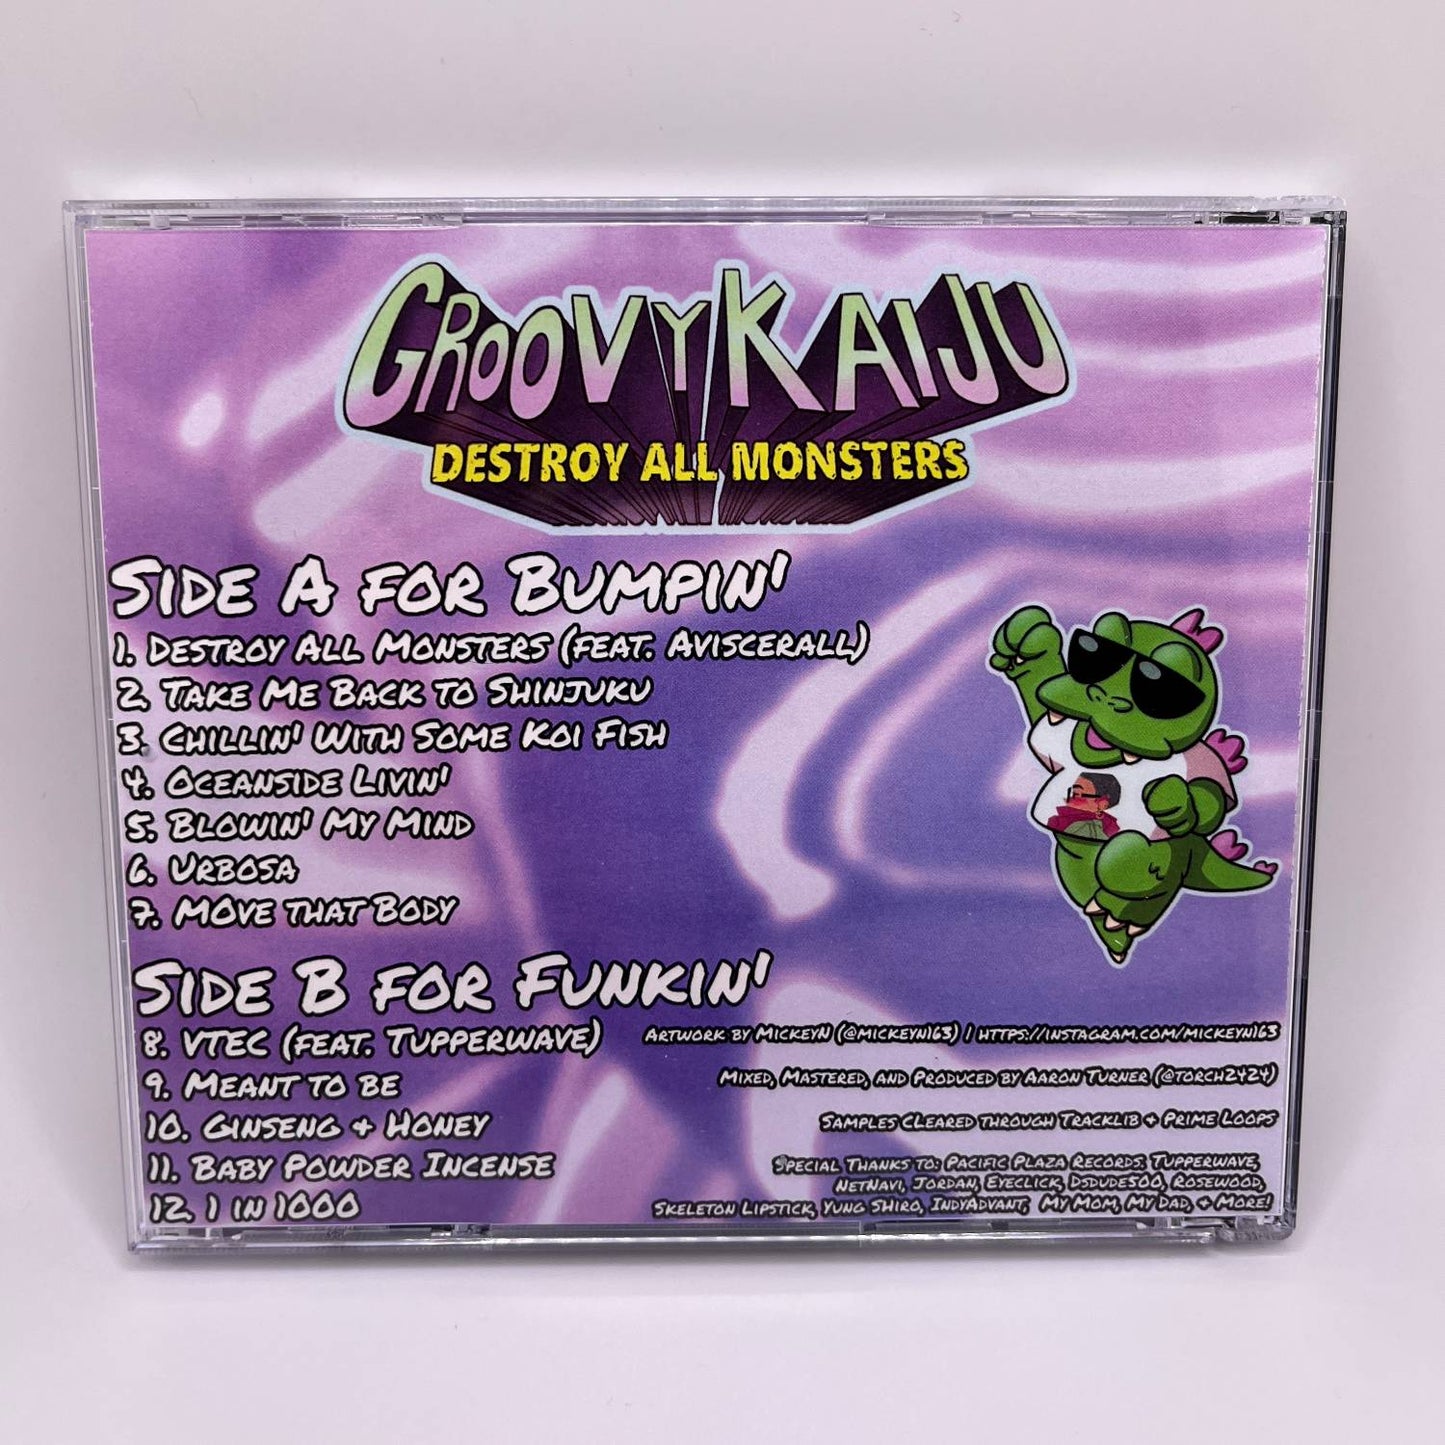 Groovy Kaiju - Destroy All Monsters CD